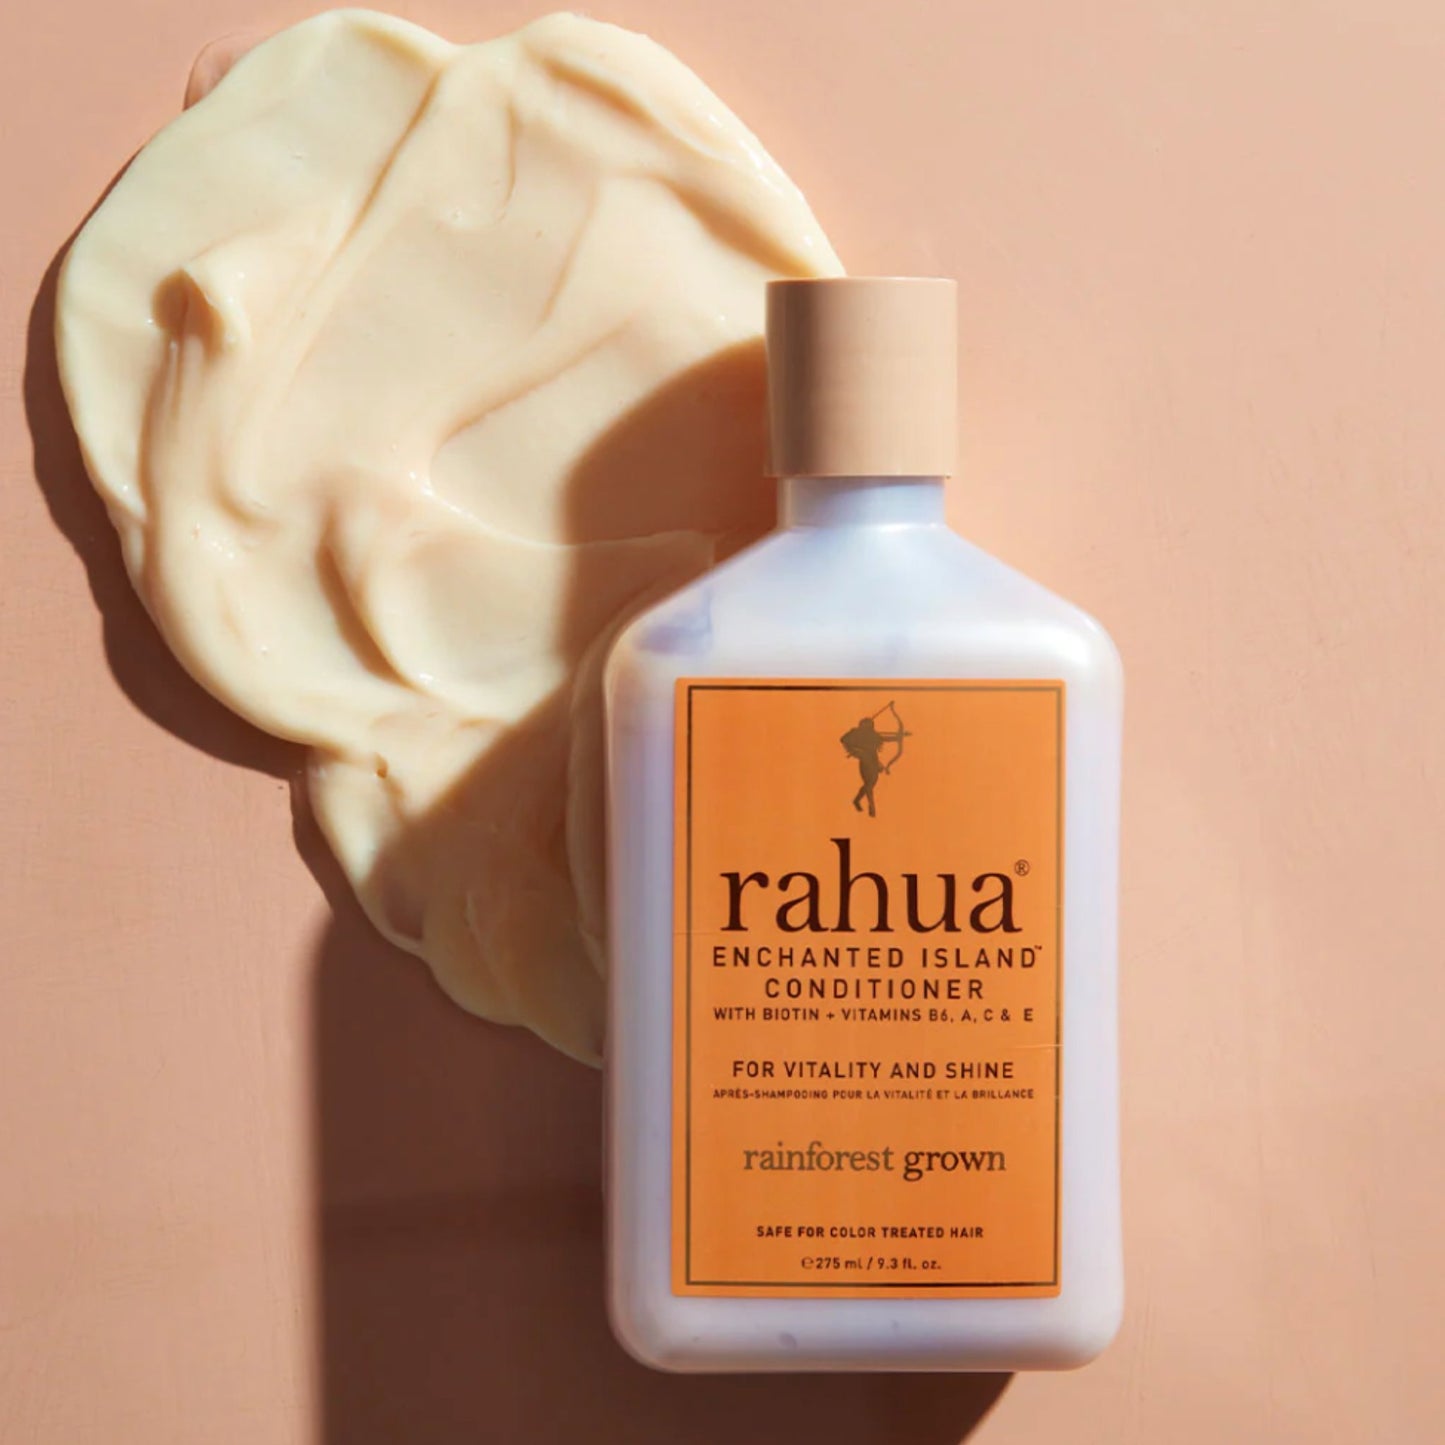 Rahua - Rahua Enchanted Island Conditioner - ORESTA clean beauty simplified